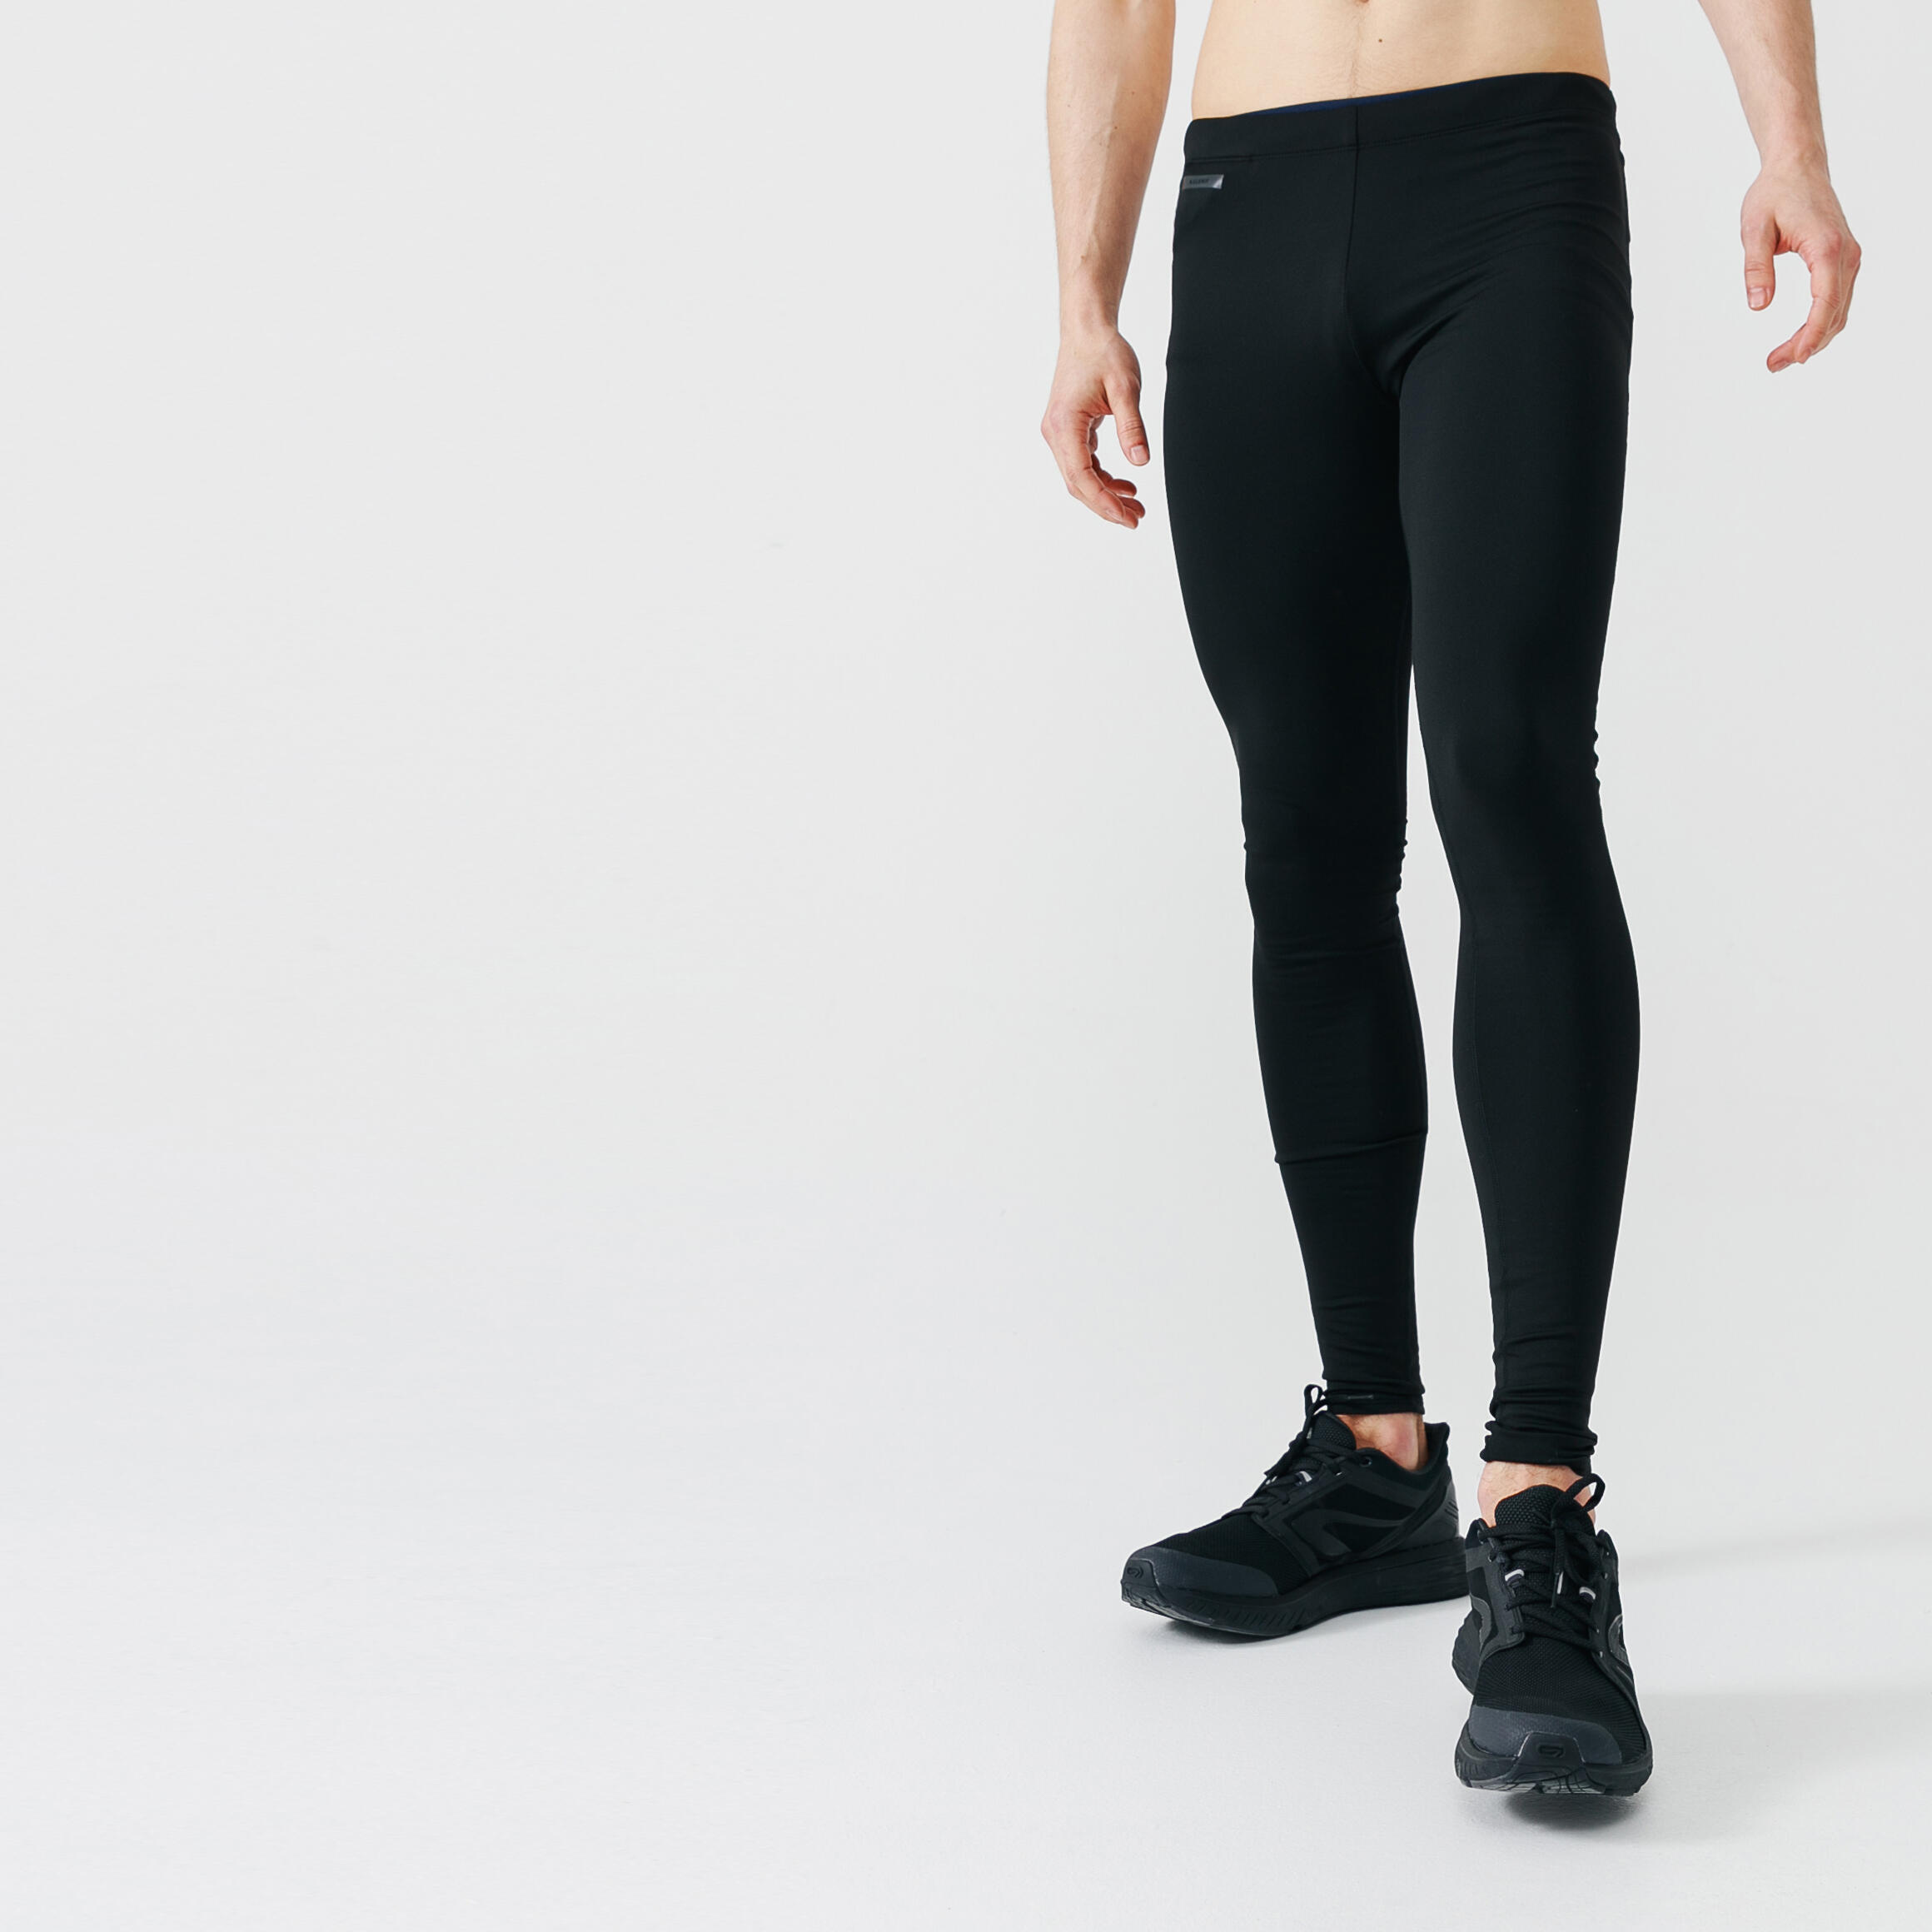 Buy Men's Running Breathable Â¾-Tights Dry - Black Online